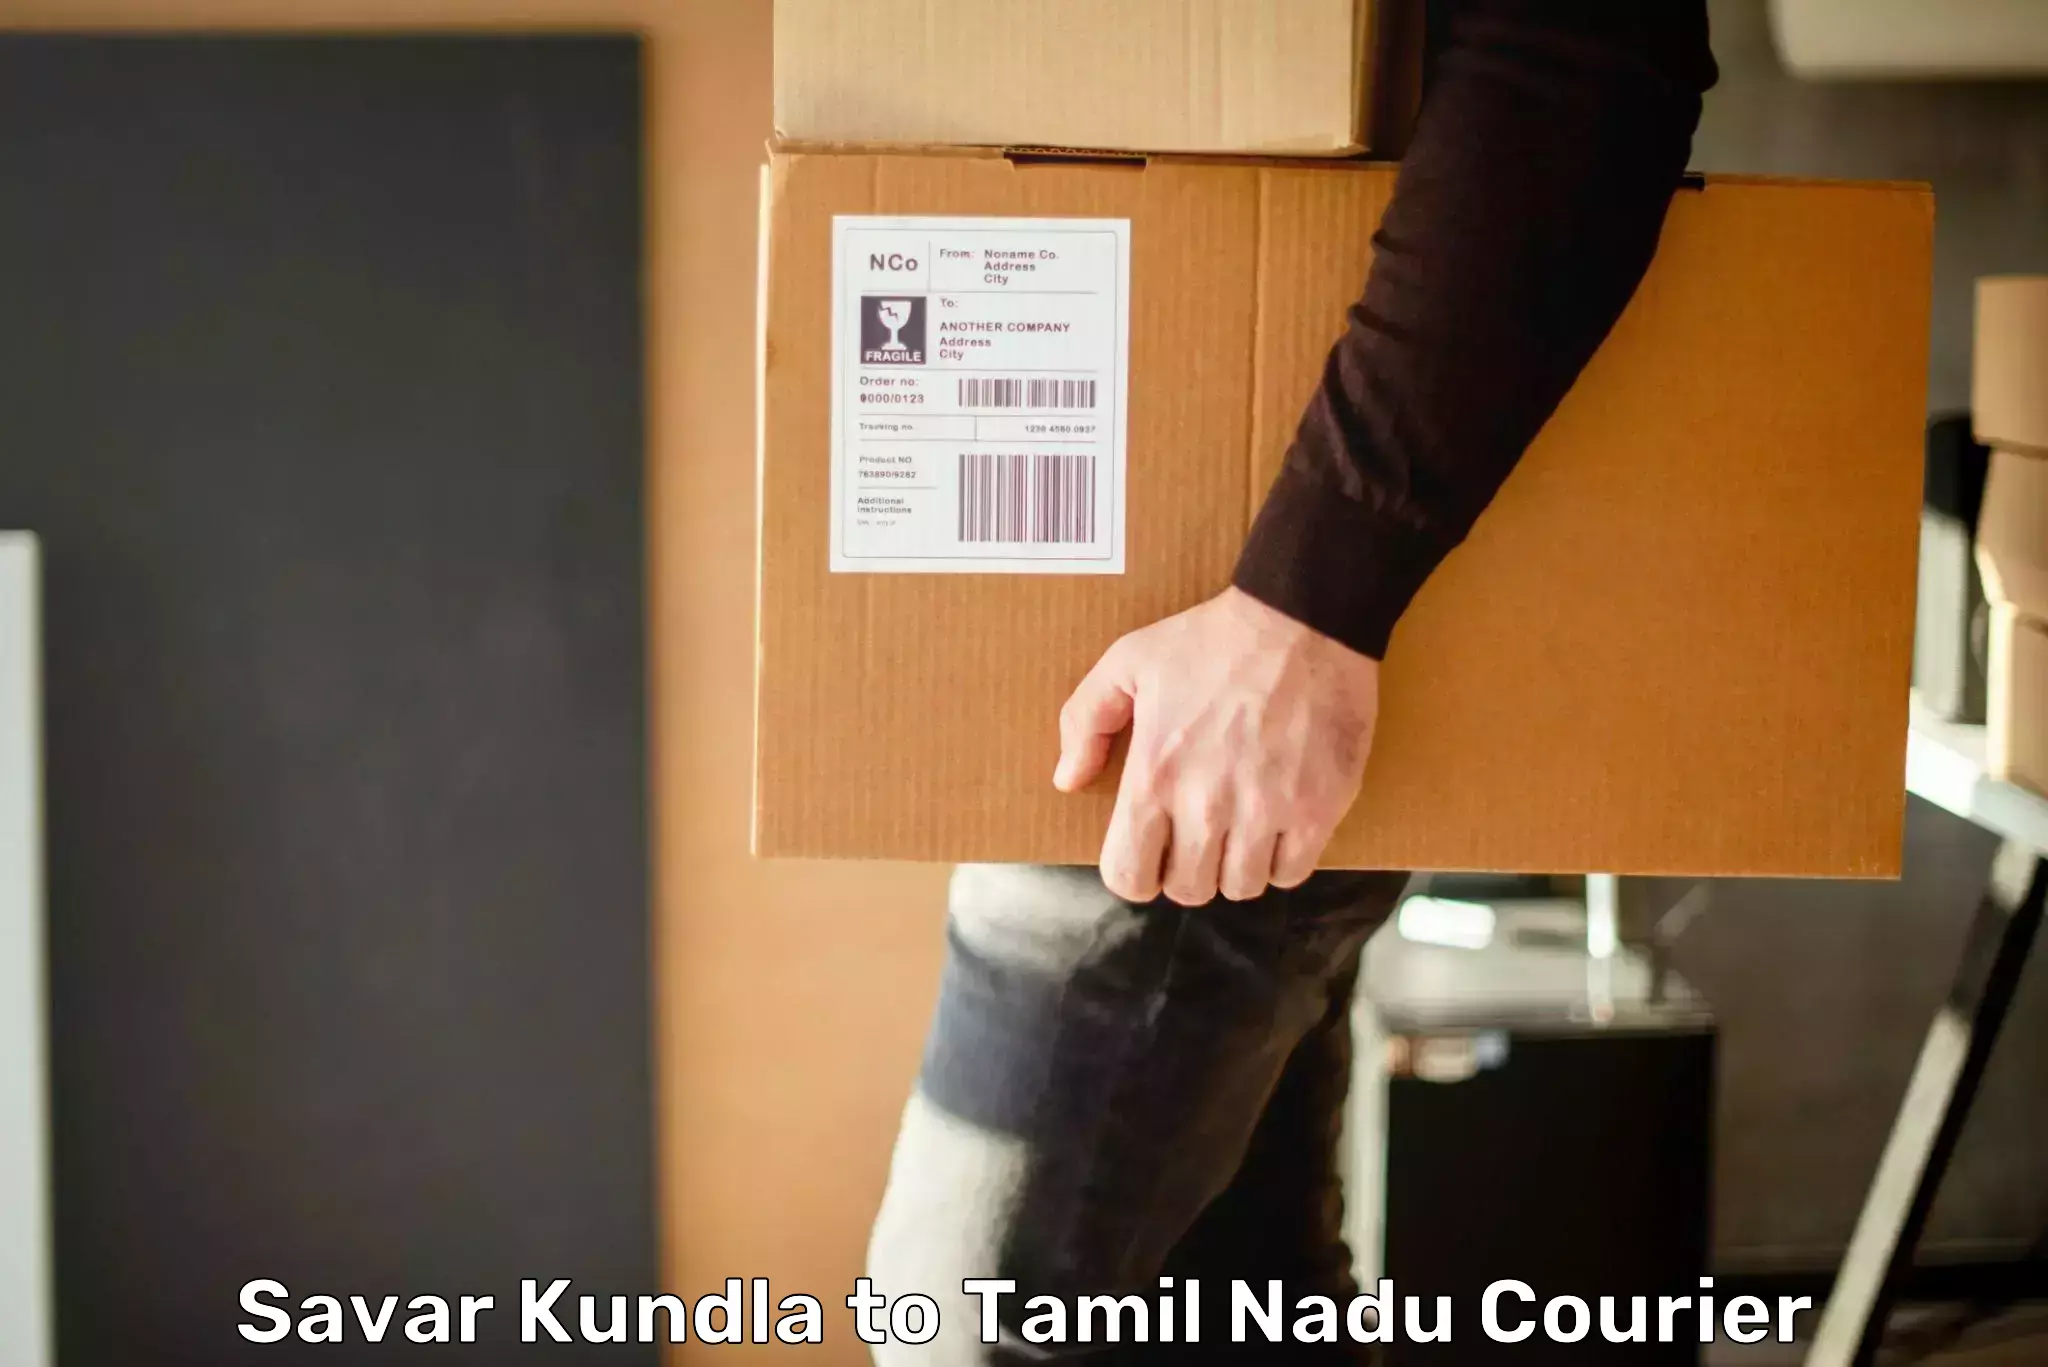 Parcel handling and care Savar Kundla to Chennai